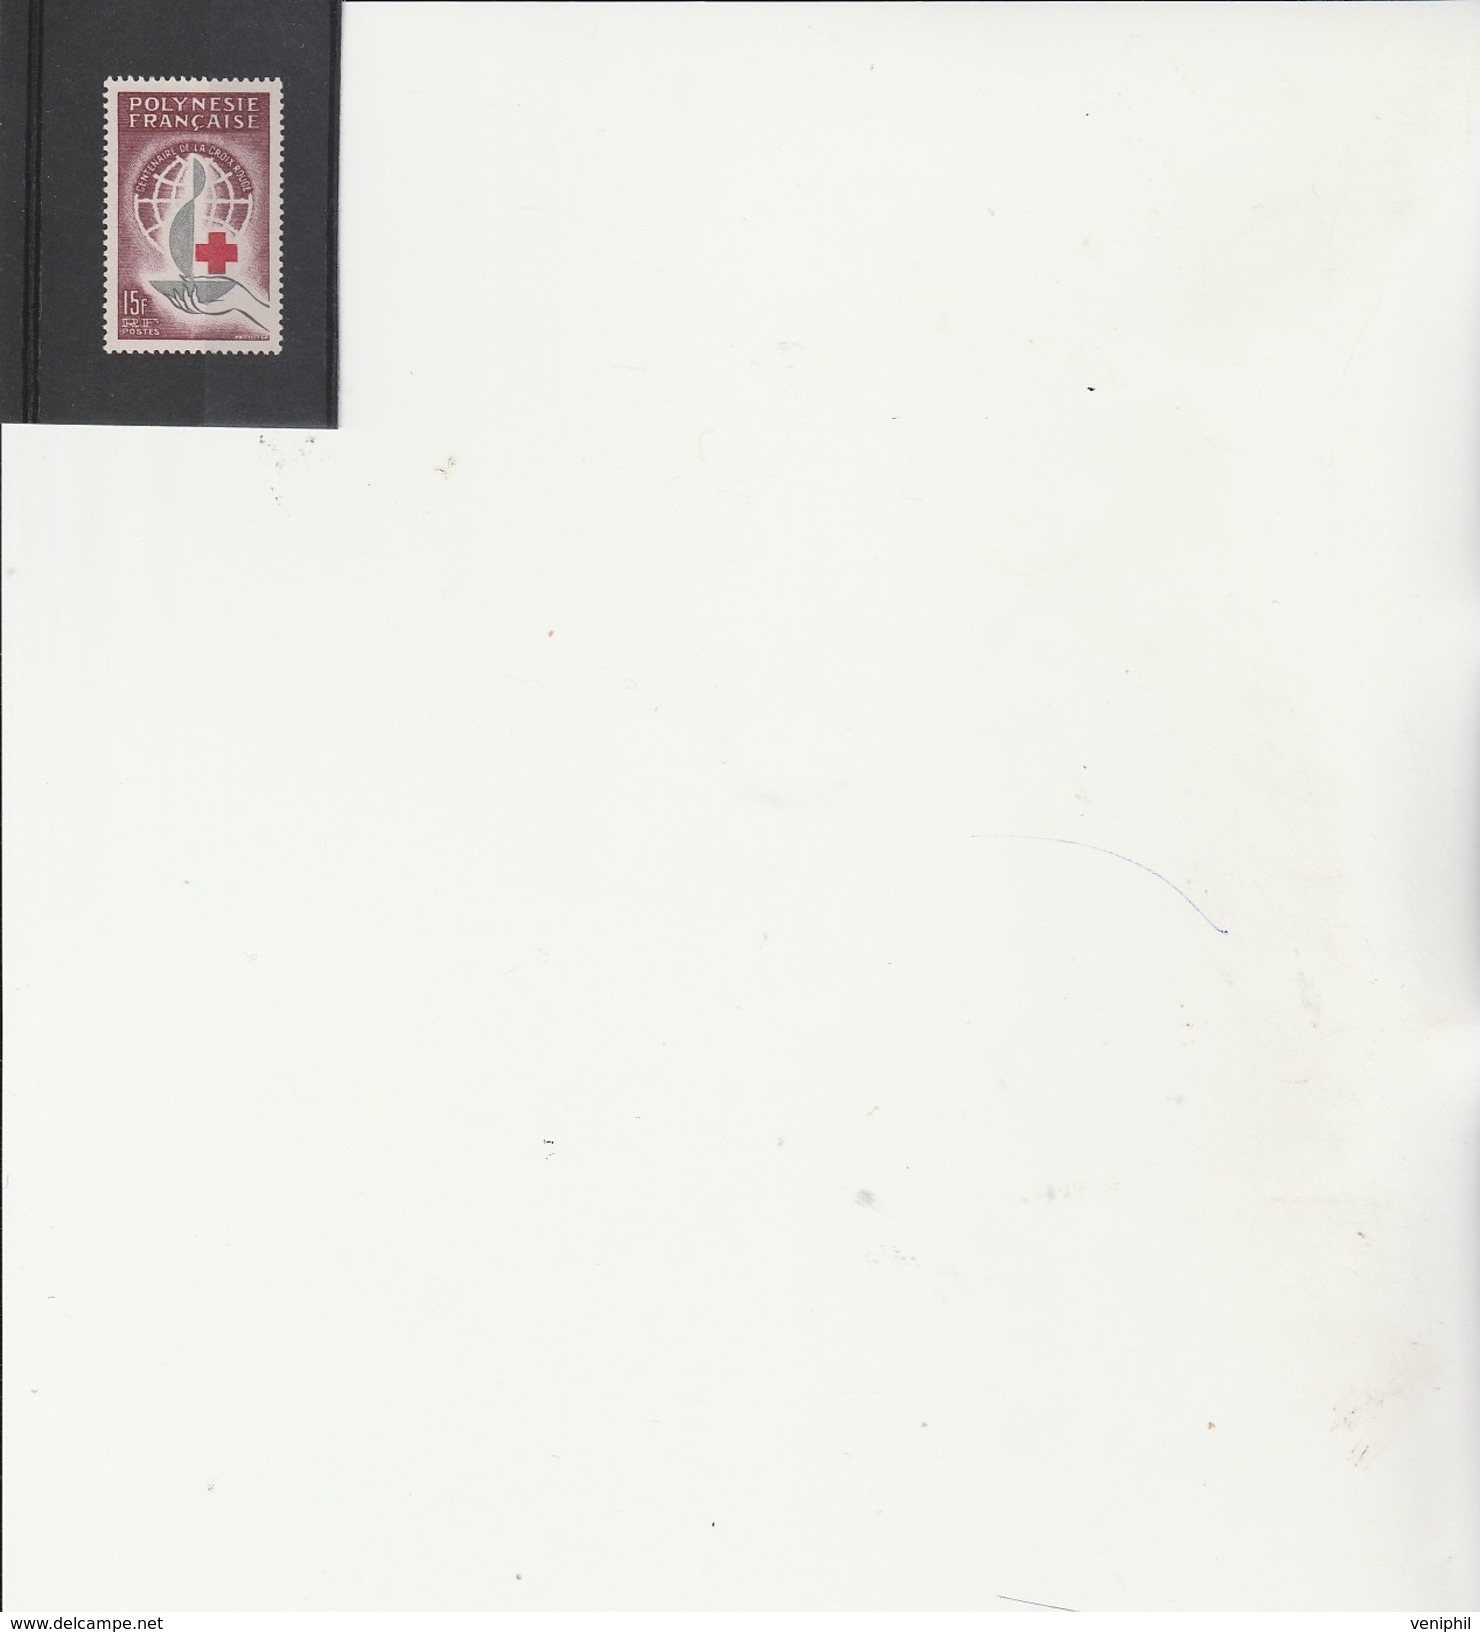 POLYNESIE FRANCAISE - CROIX ROUGE CENTENAIRE -N° 24 NEUF SANS CHARNIERE -ANNEE 1963 -COTE : 15,50 € - Unused Stamps